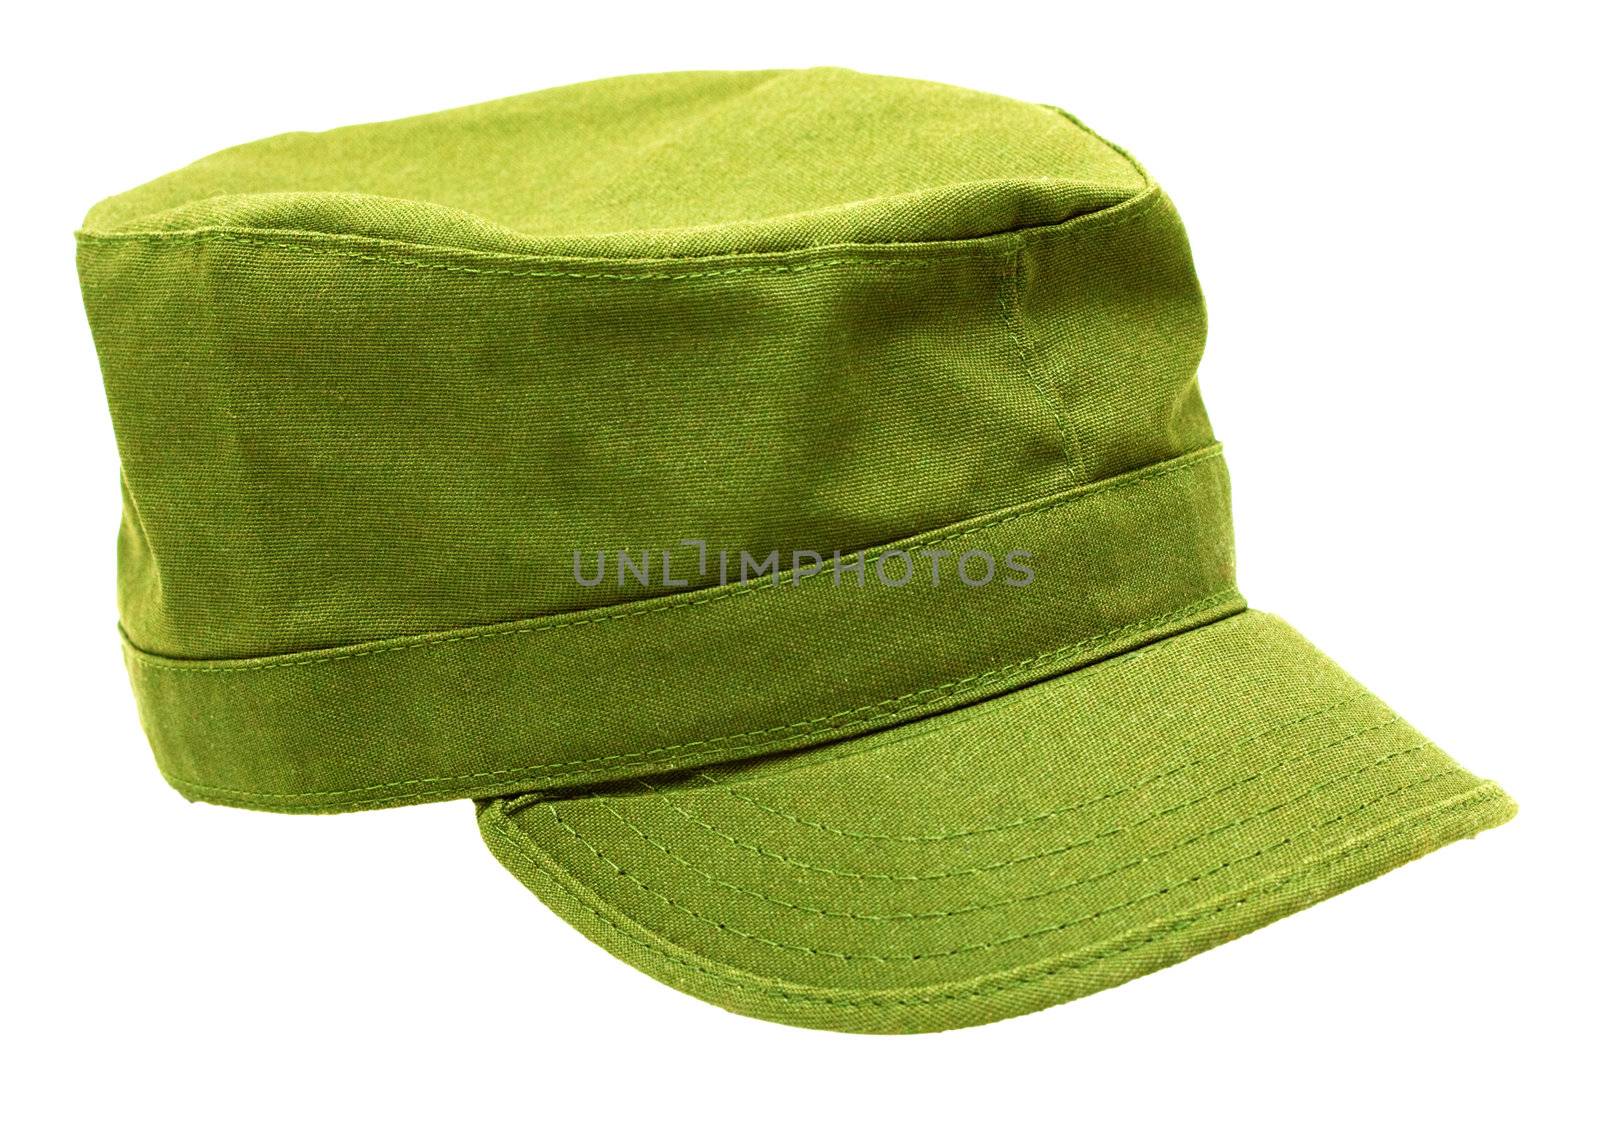 Military-style cap by Gdolgikh